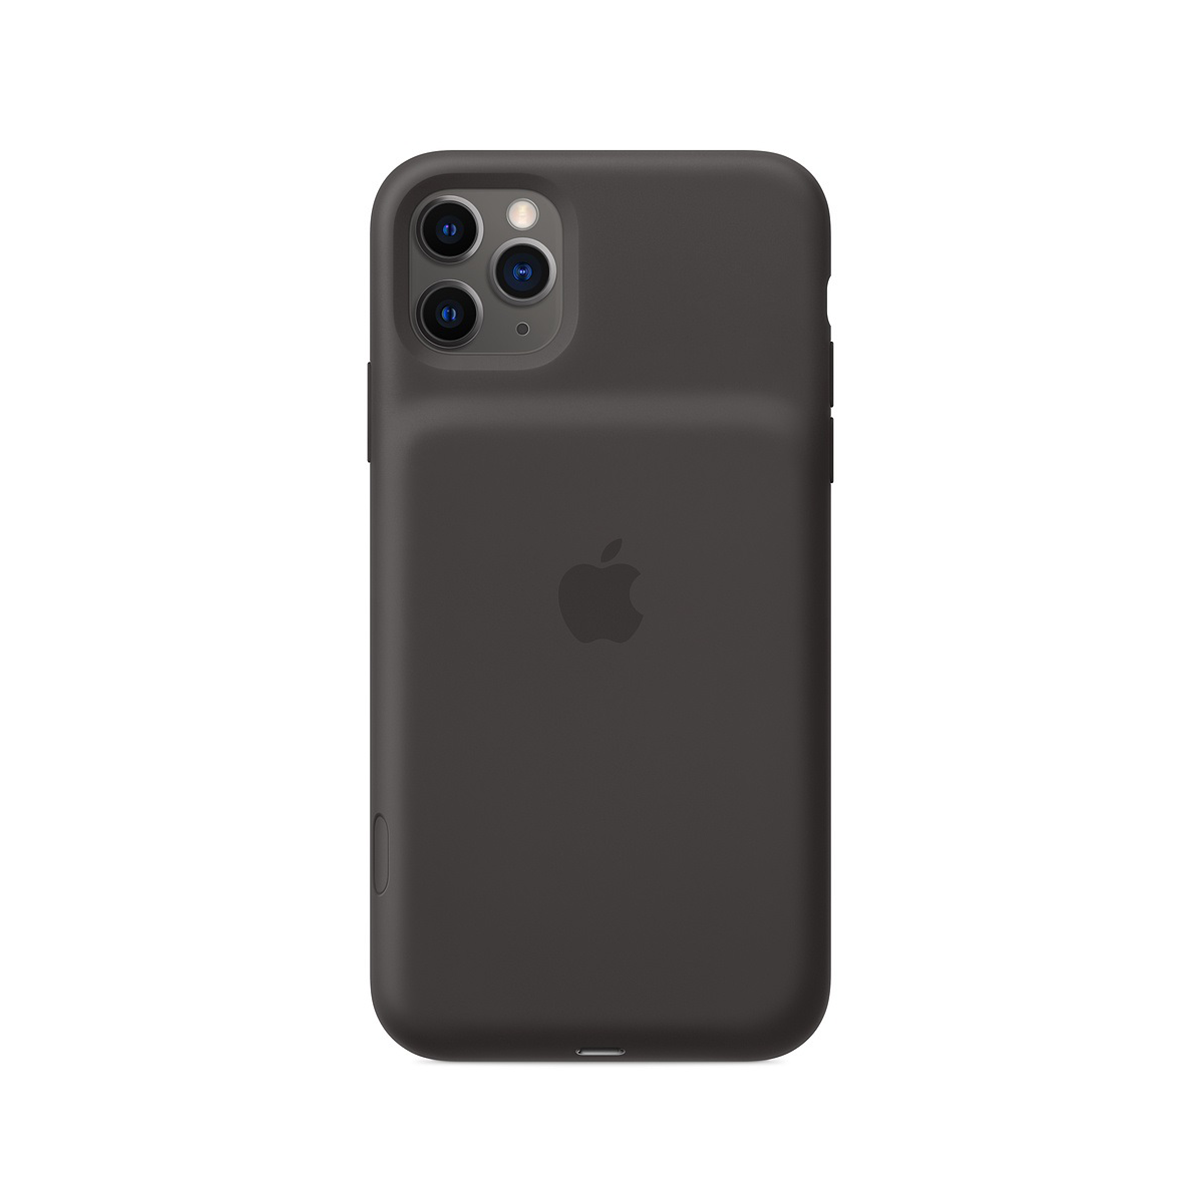 iPhone 11 Pro Max Smart Battery Case - Black